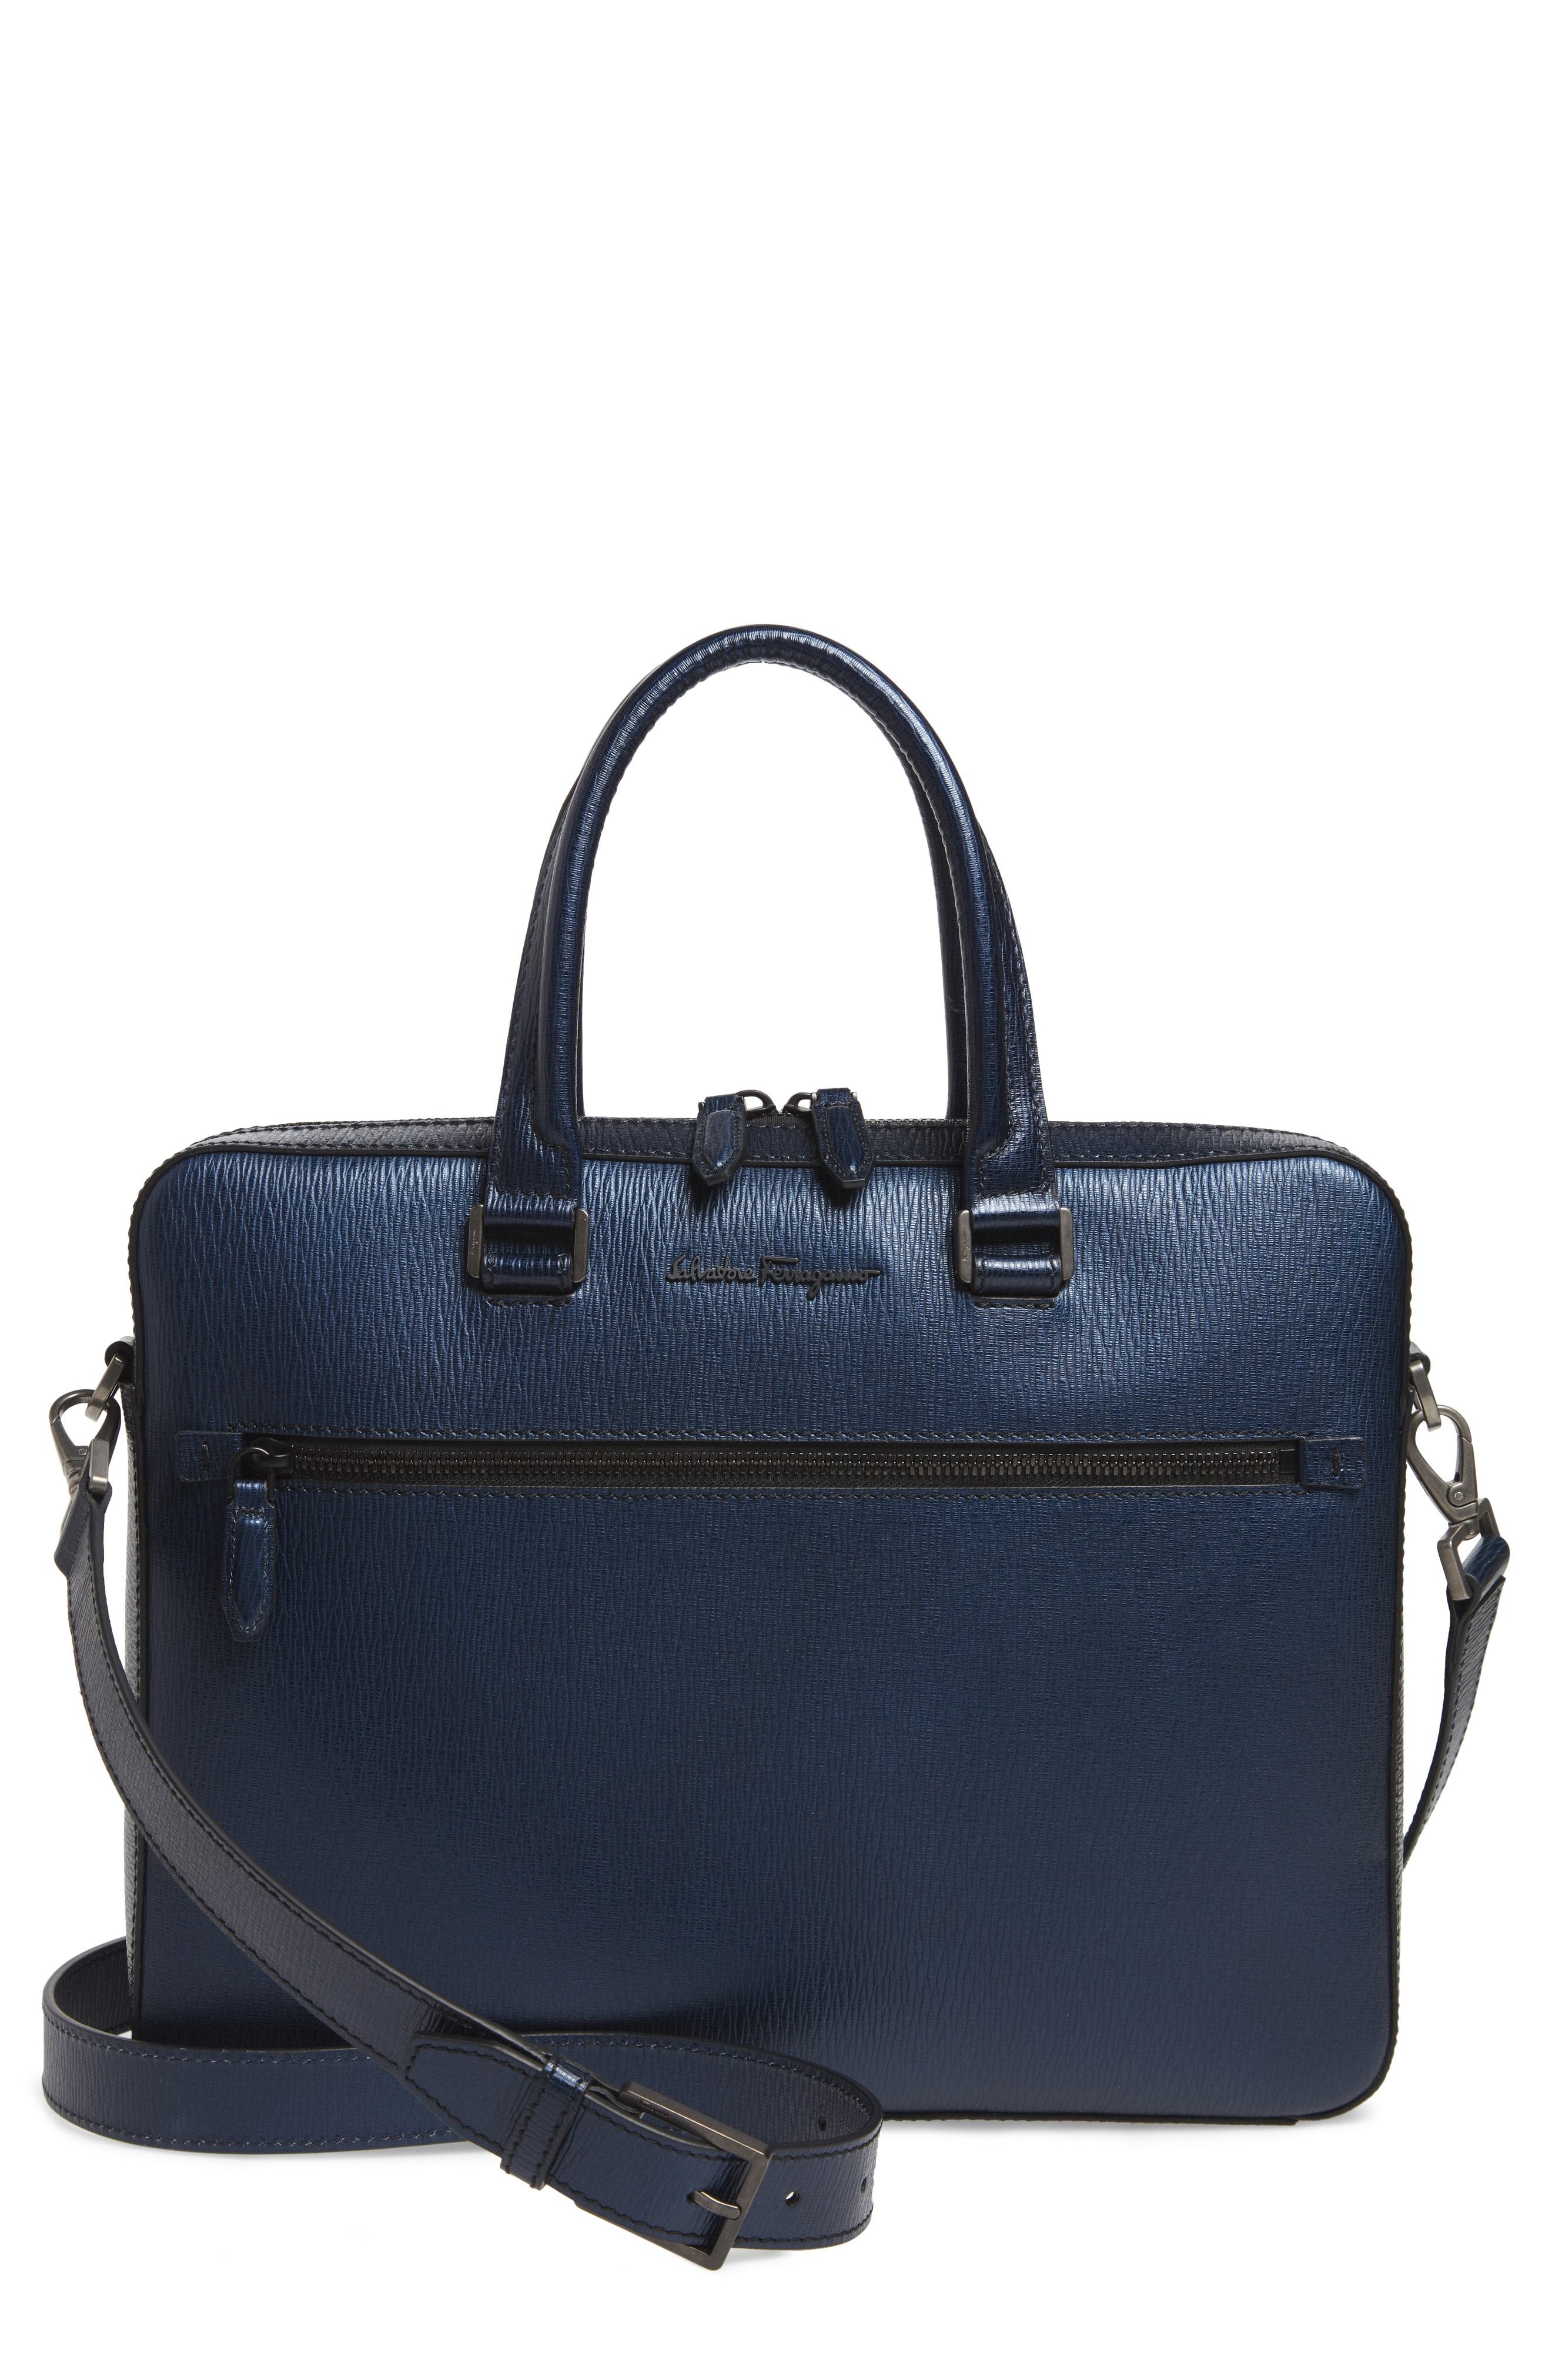 Salvatore Ferragamo Revival Metta Leather Briefcase, $1,390 | Nordstrom ...